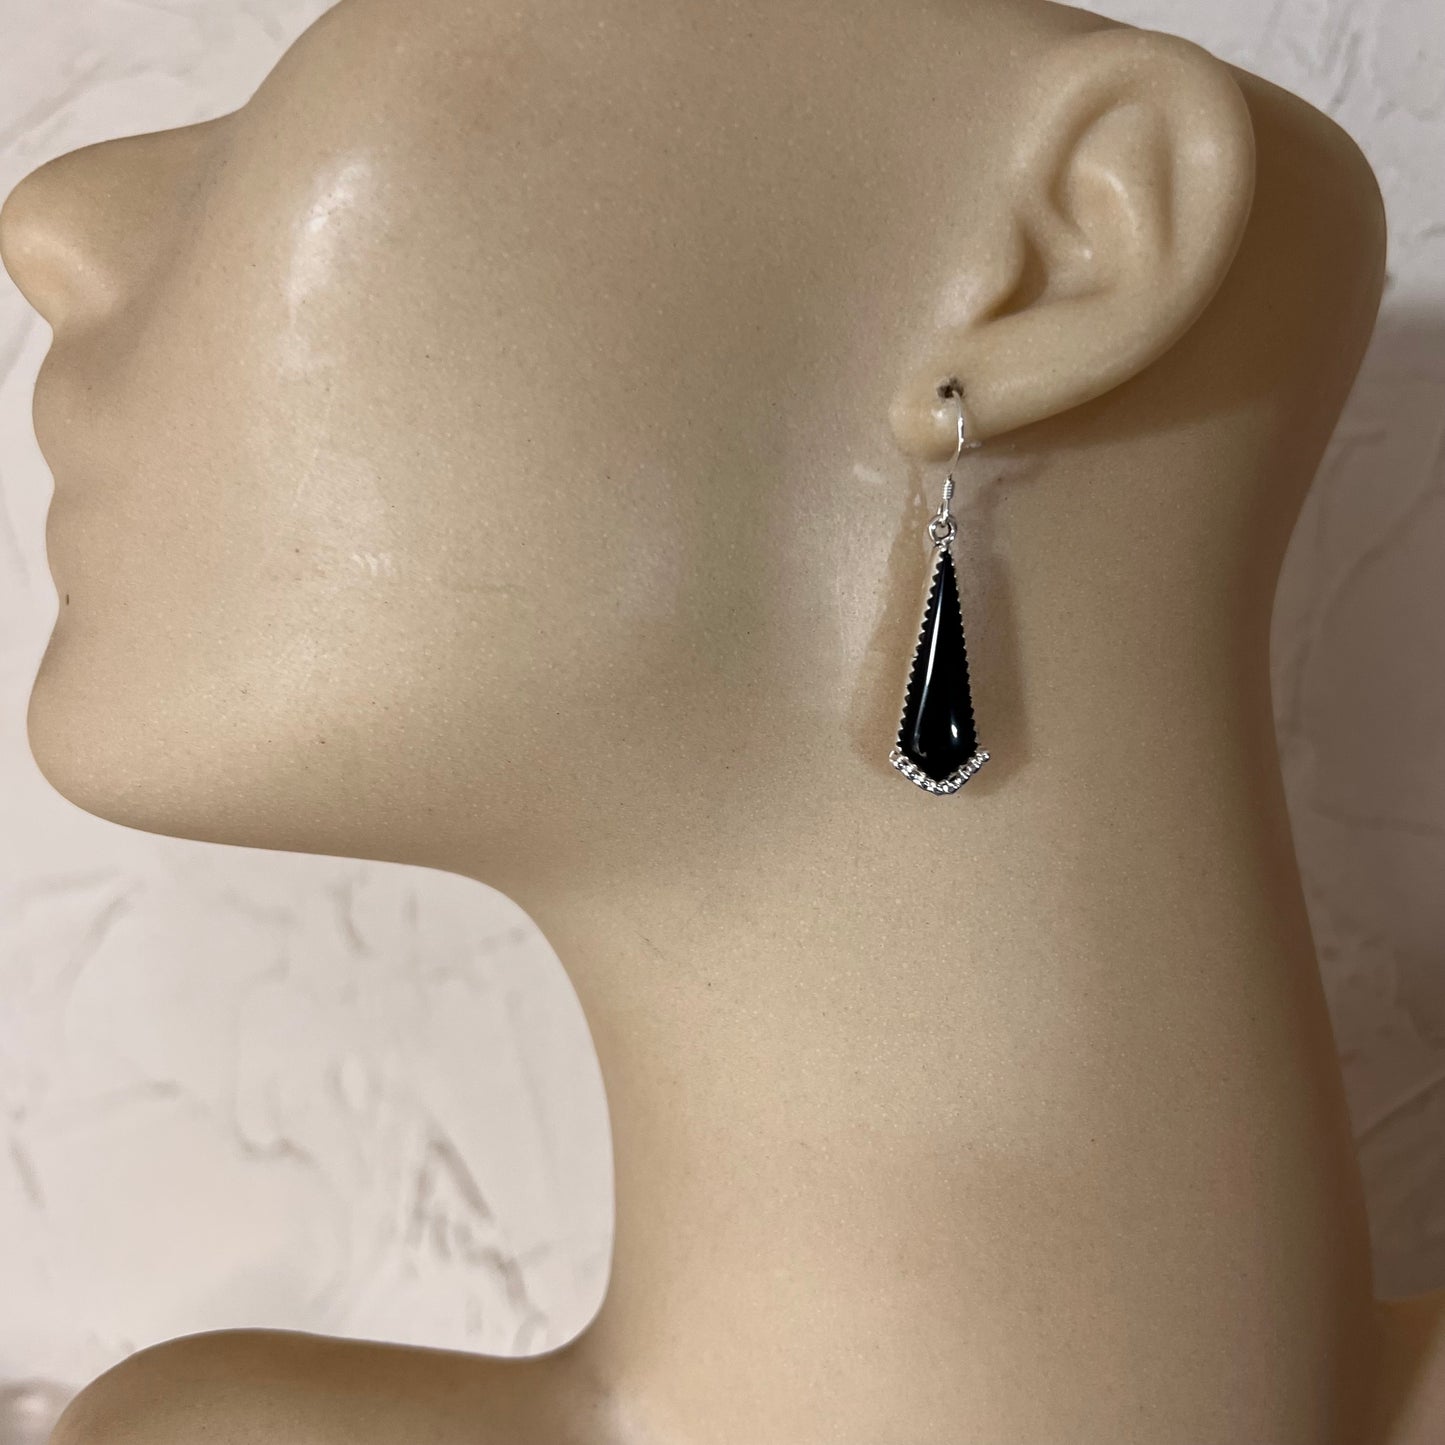 Black onyx sterling silver drop earrings, small dangle, dressy modern style, Navajo handmade Verley Betone signed